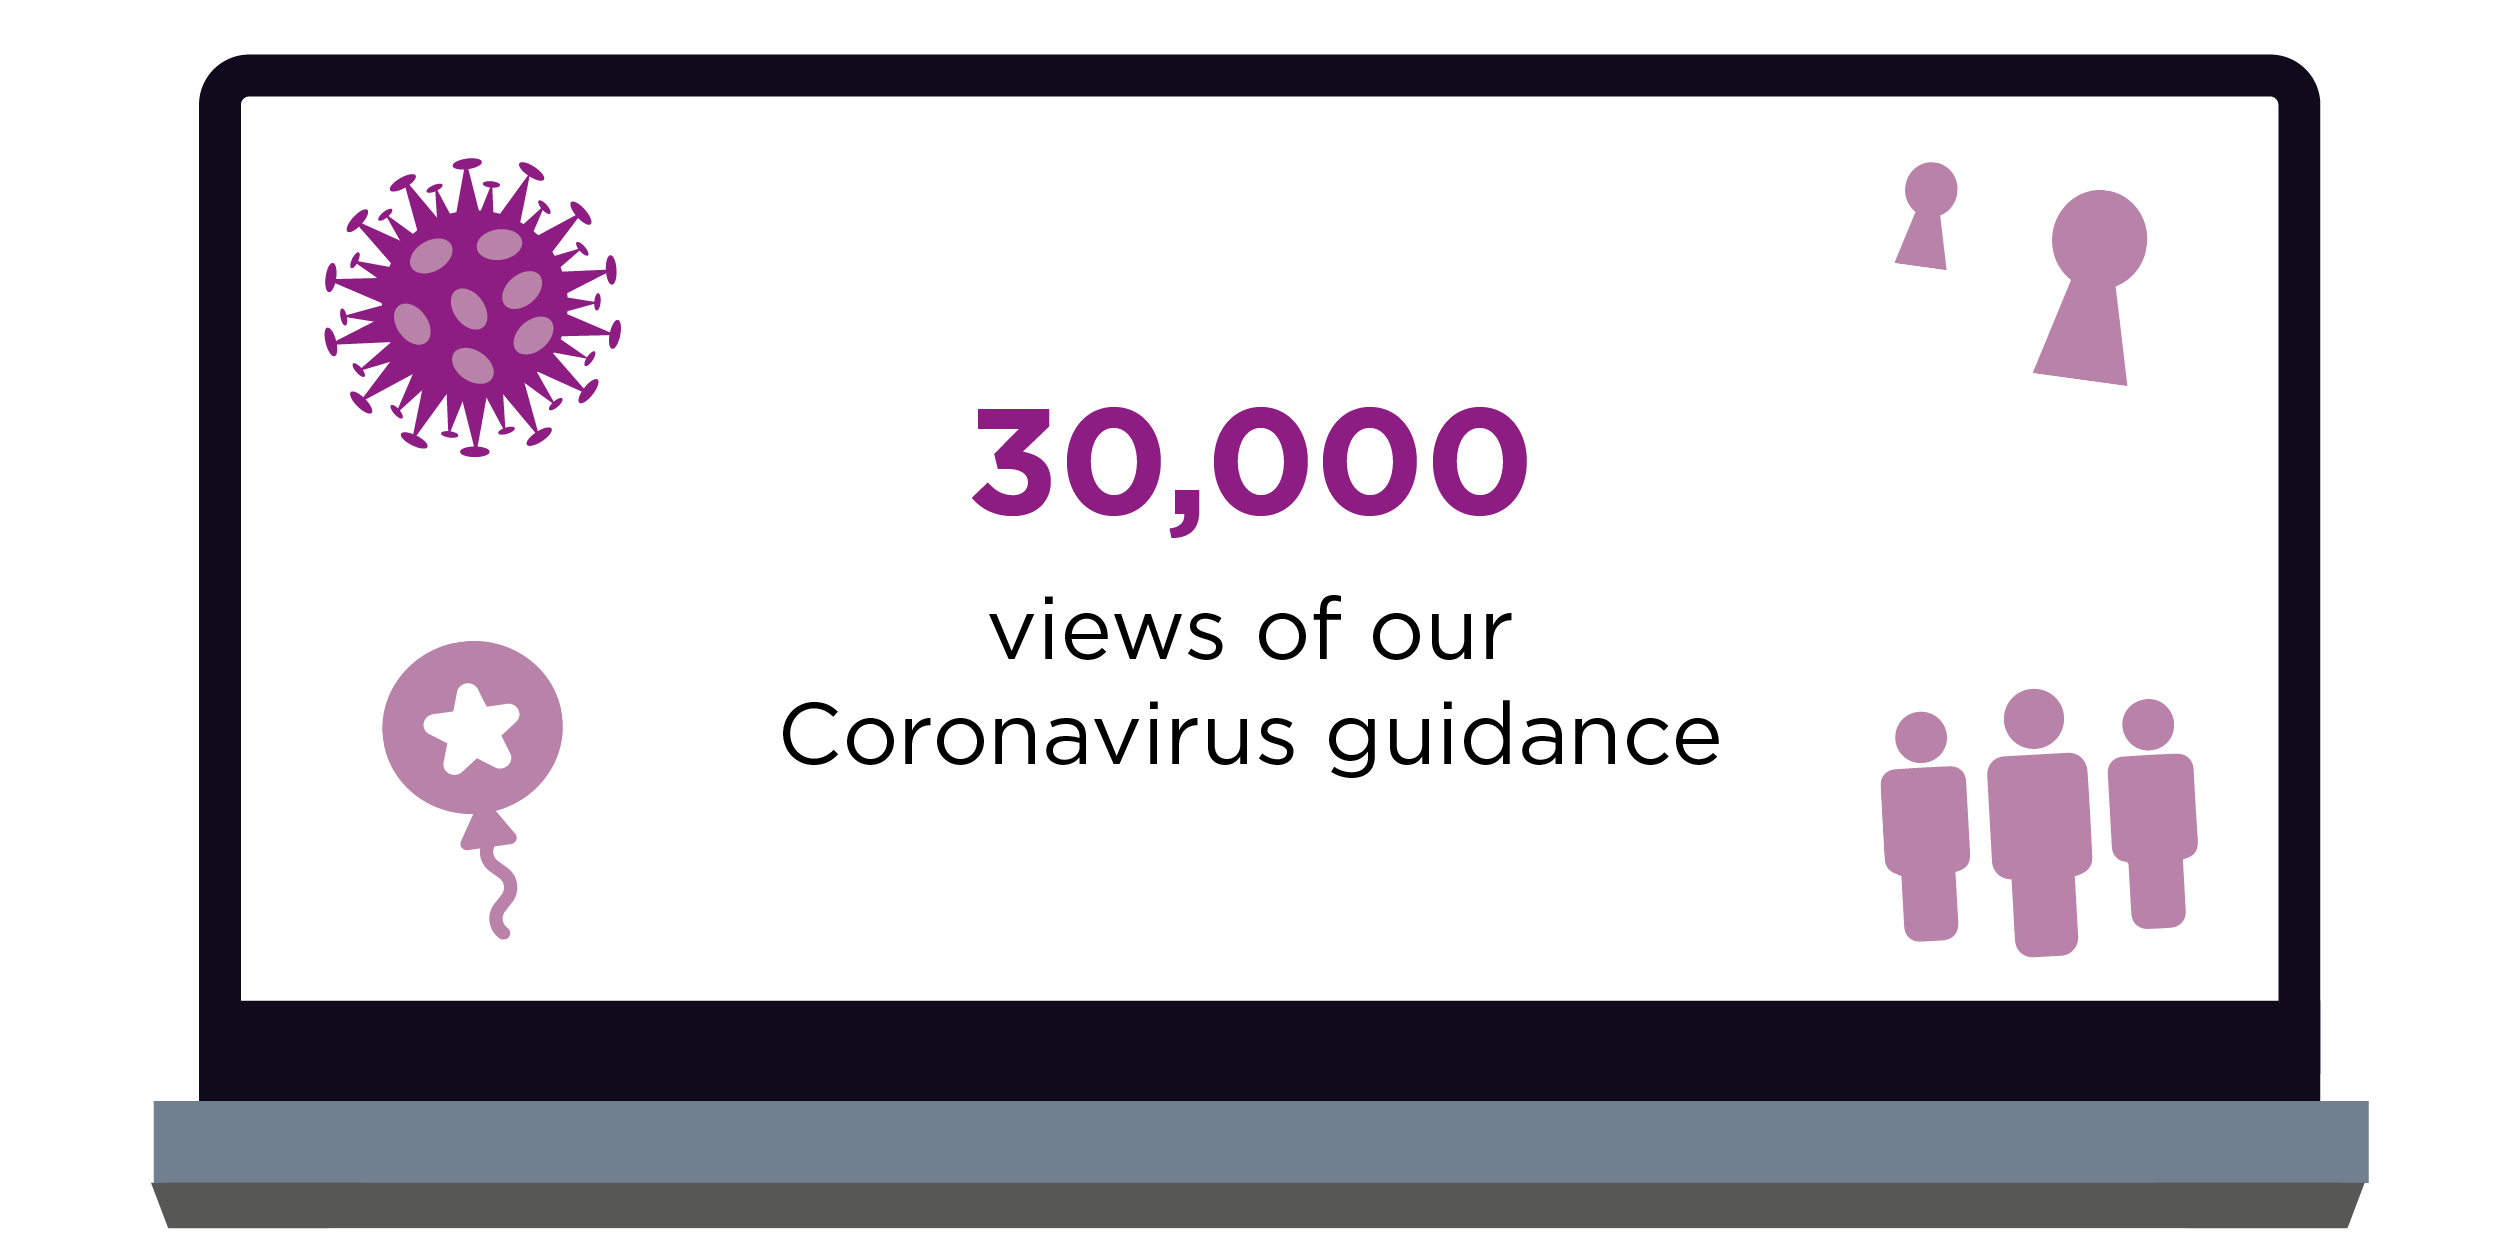 Image shows number of views of Coronavirus guidance